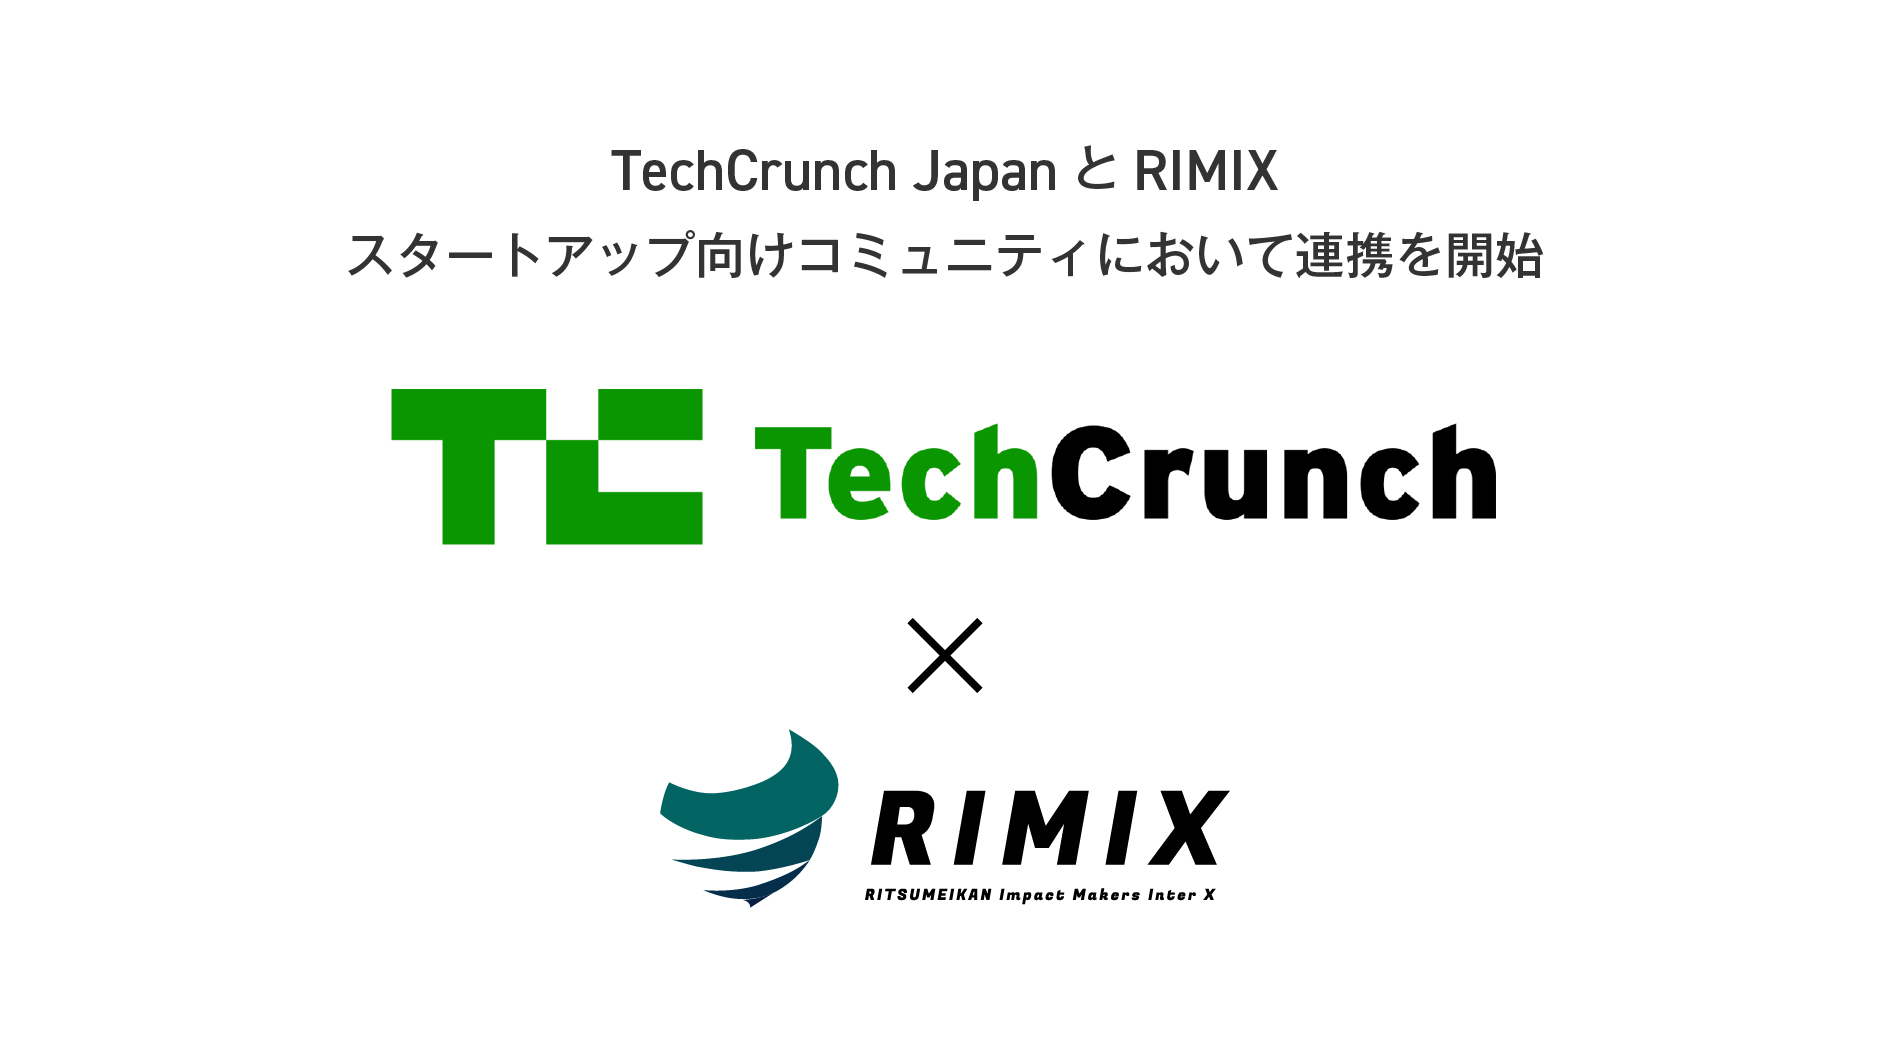 TechCrunch JapanとRIMIXが、スタートアップ向けコミュニティにおいて連携を開始しました